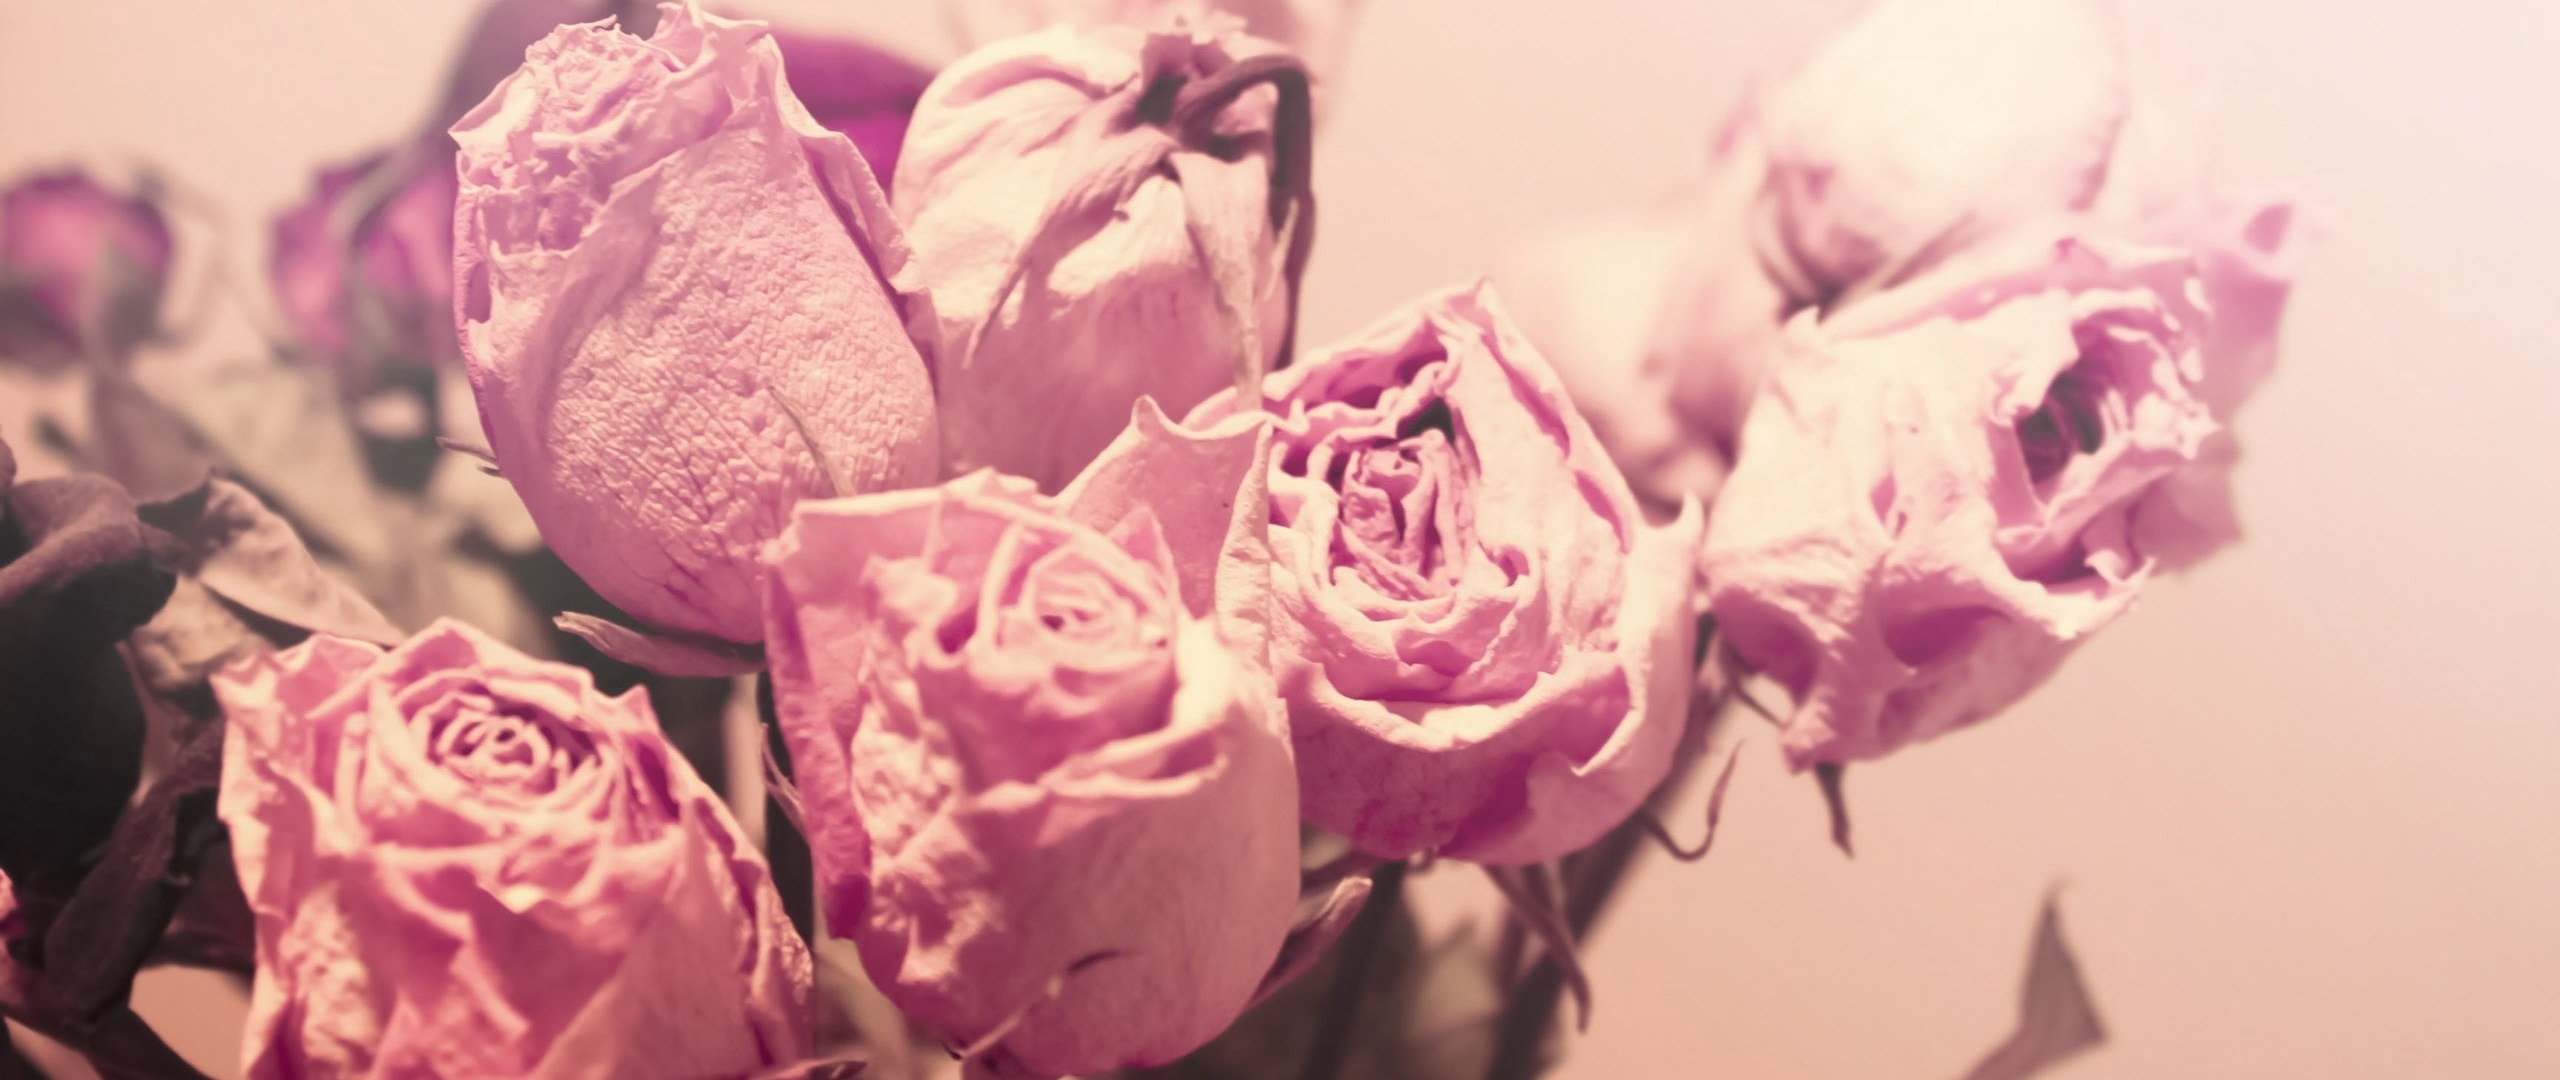 Wallpaper Roses, Flowers, Sweet, Dried, Buds - Dried Rose Flower - HD Wallpaper 